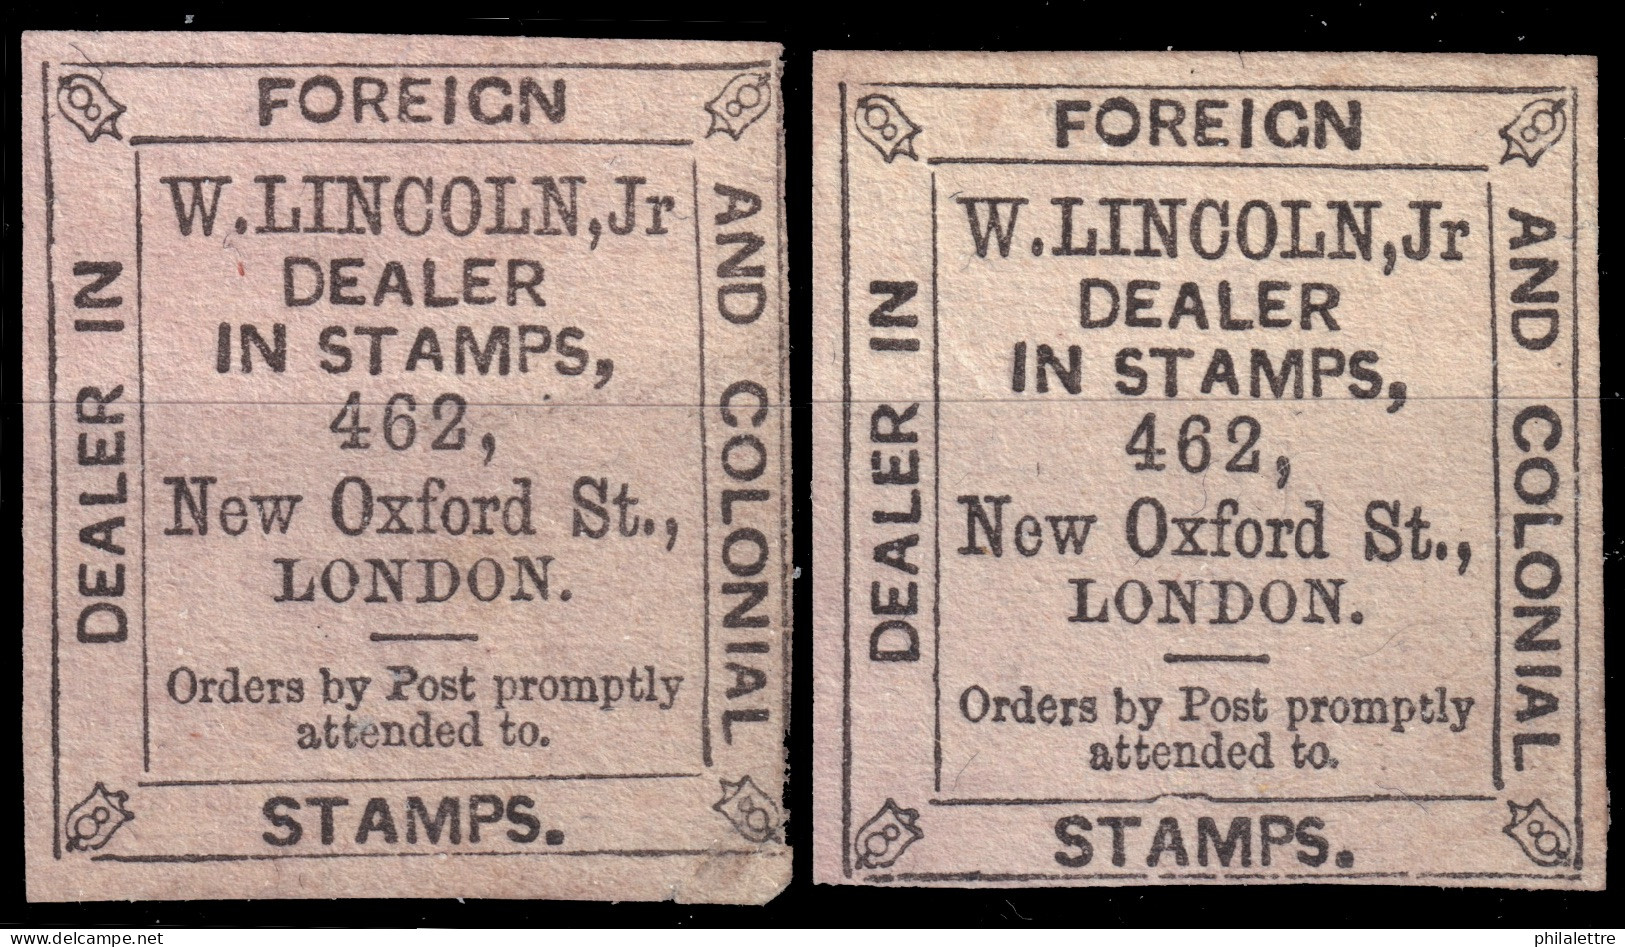 ROYAUME-UNI / UNITED KINGDOM - 2x 1900s/1920s Labels For Stamp Dealer William Lincoln, Jr. Black On Pinkish White - Cinderellas